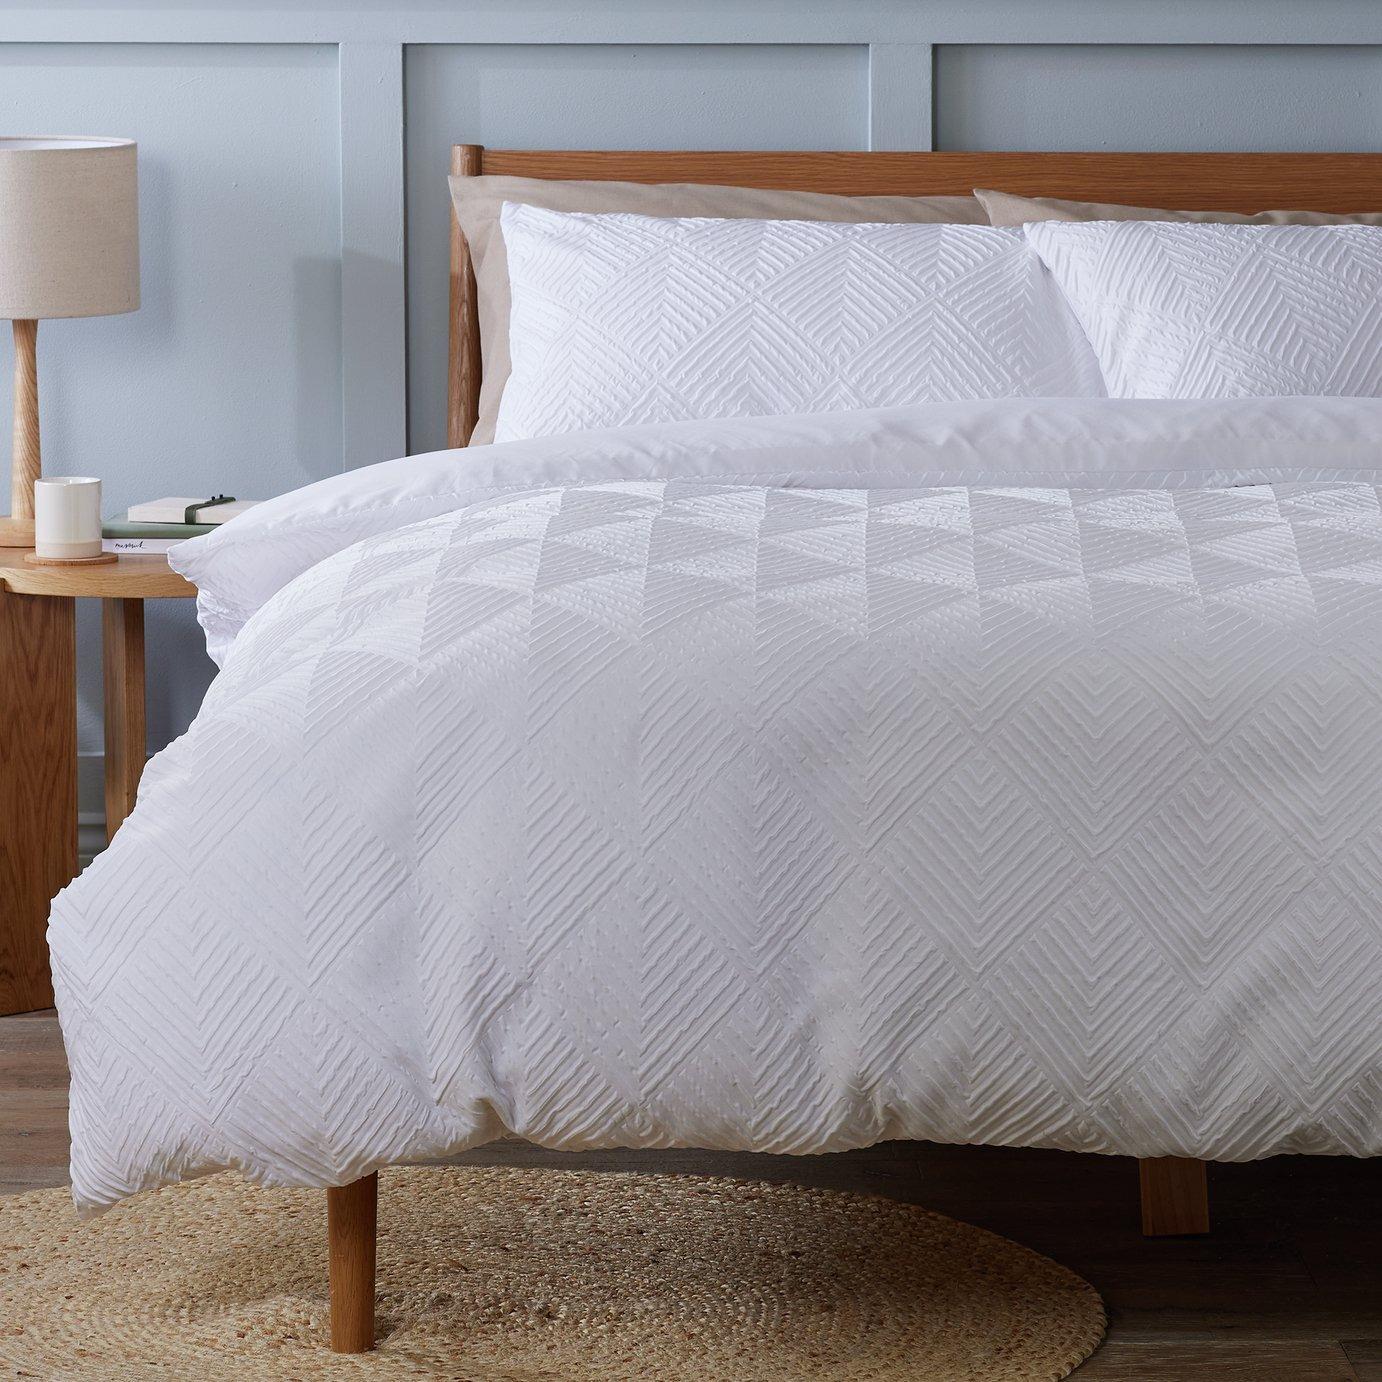 Argos Home Textured Embossed White Bedding Set - Double - image 1